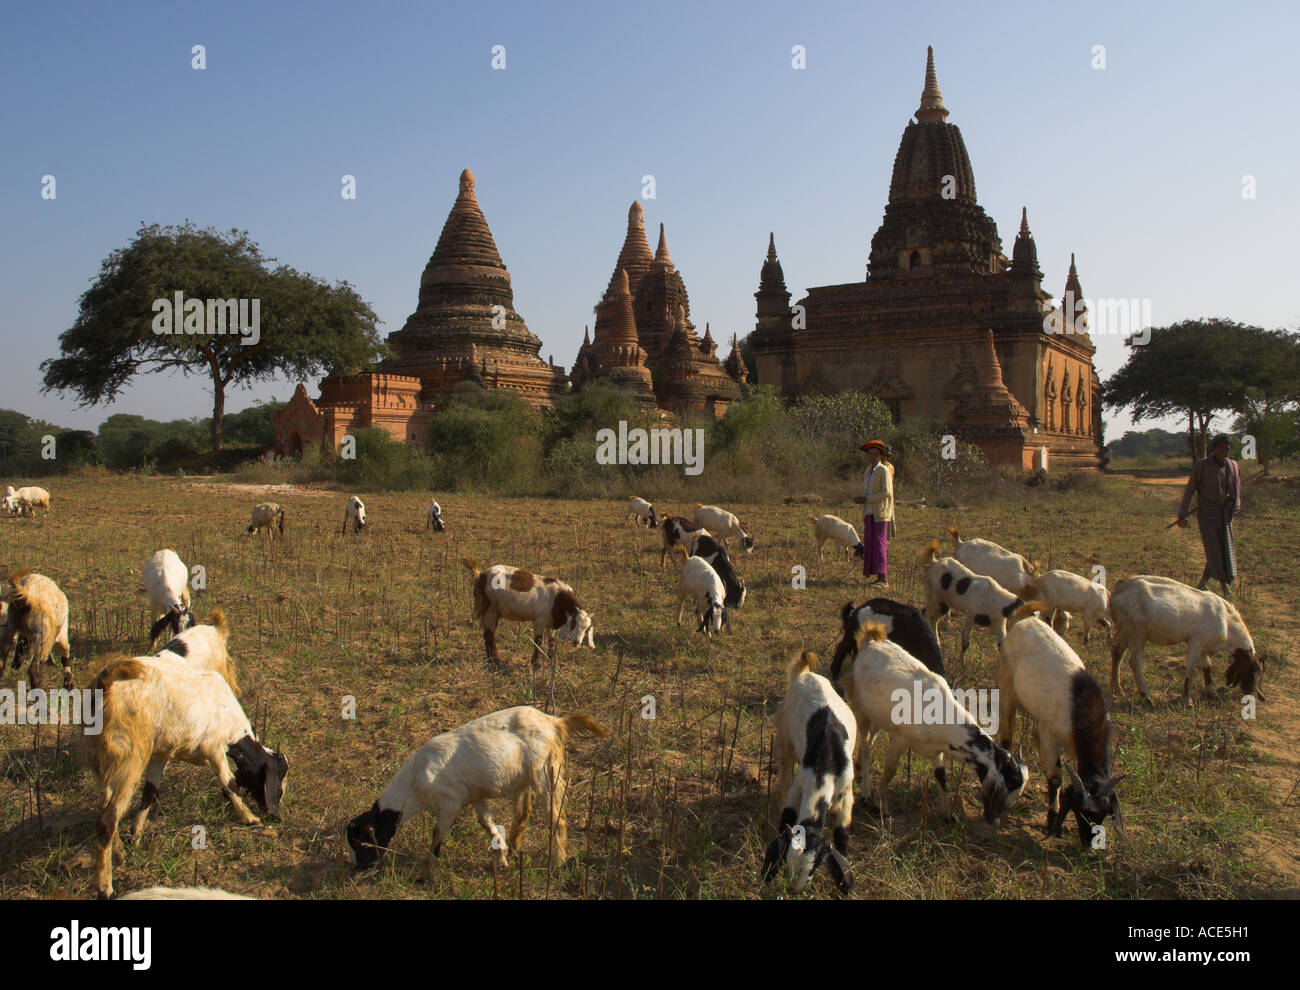 Myanmar-Burma-Bagan archäologische Zone mehr als 4000 Tempel in einer Flussbiegung des Ayeyarwady Fluss Ziegen Herde Weiden vor t Stockfoto